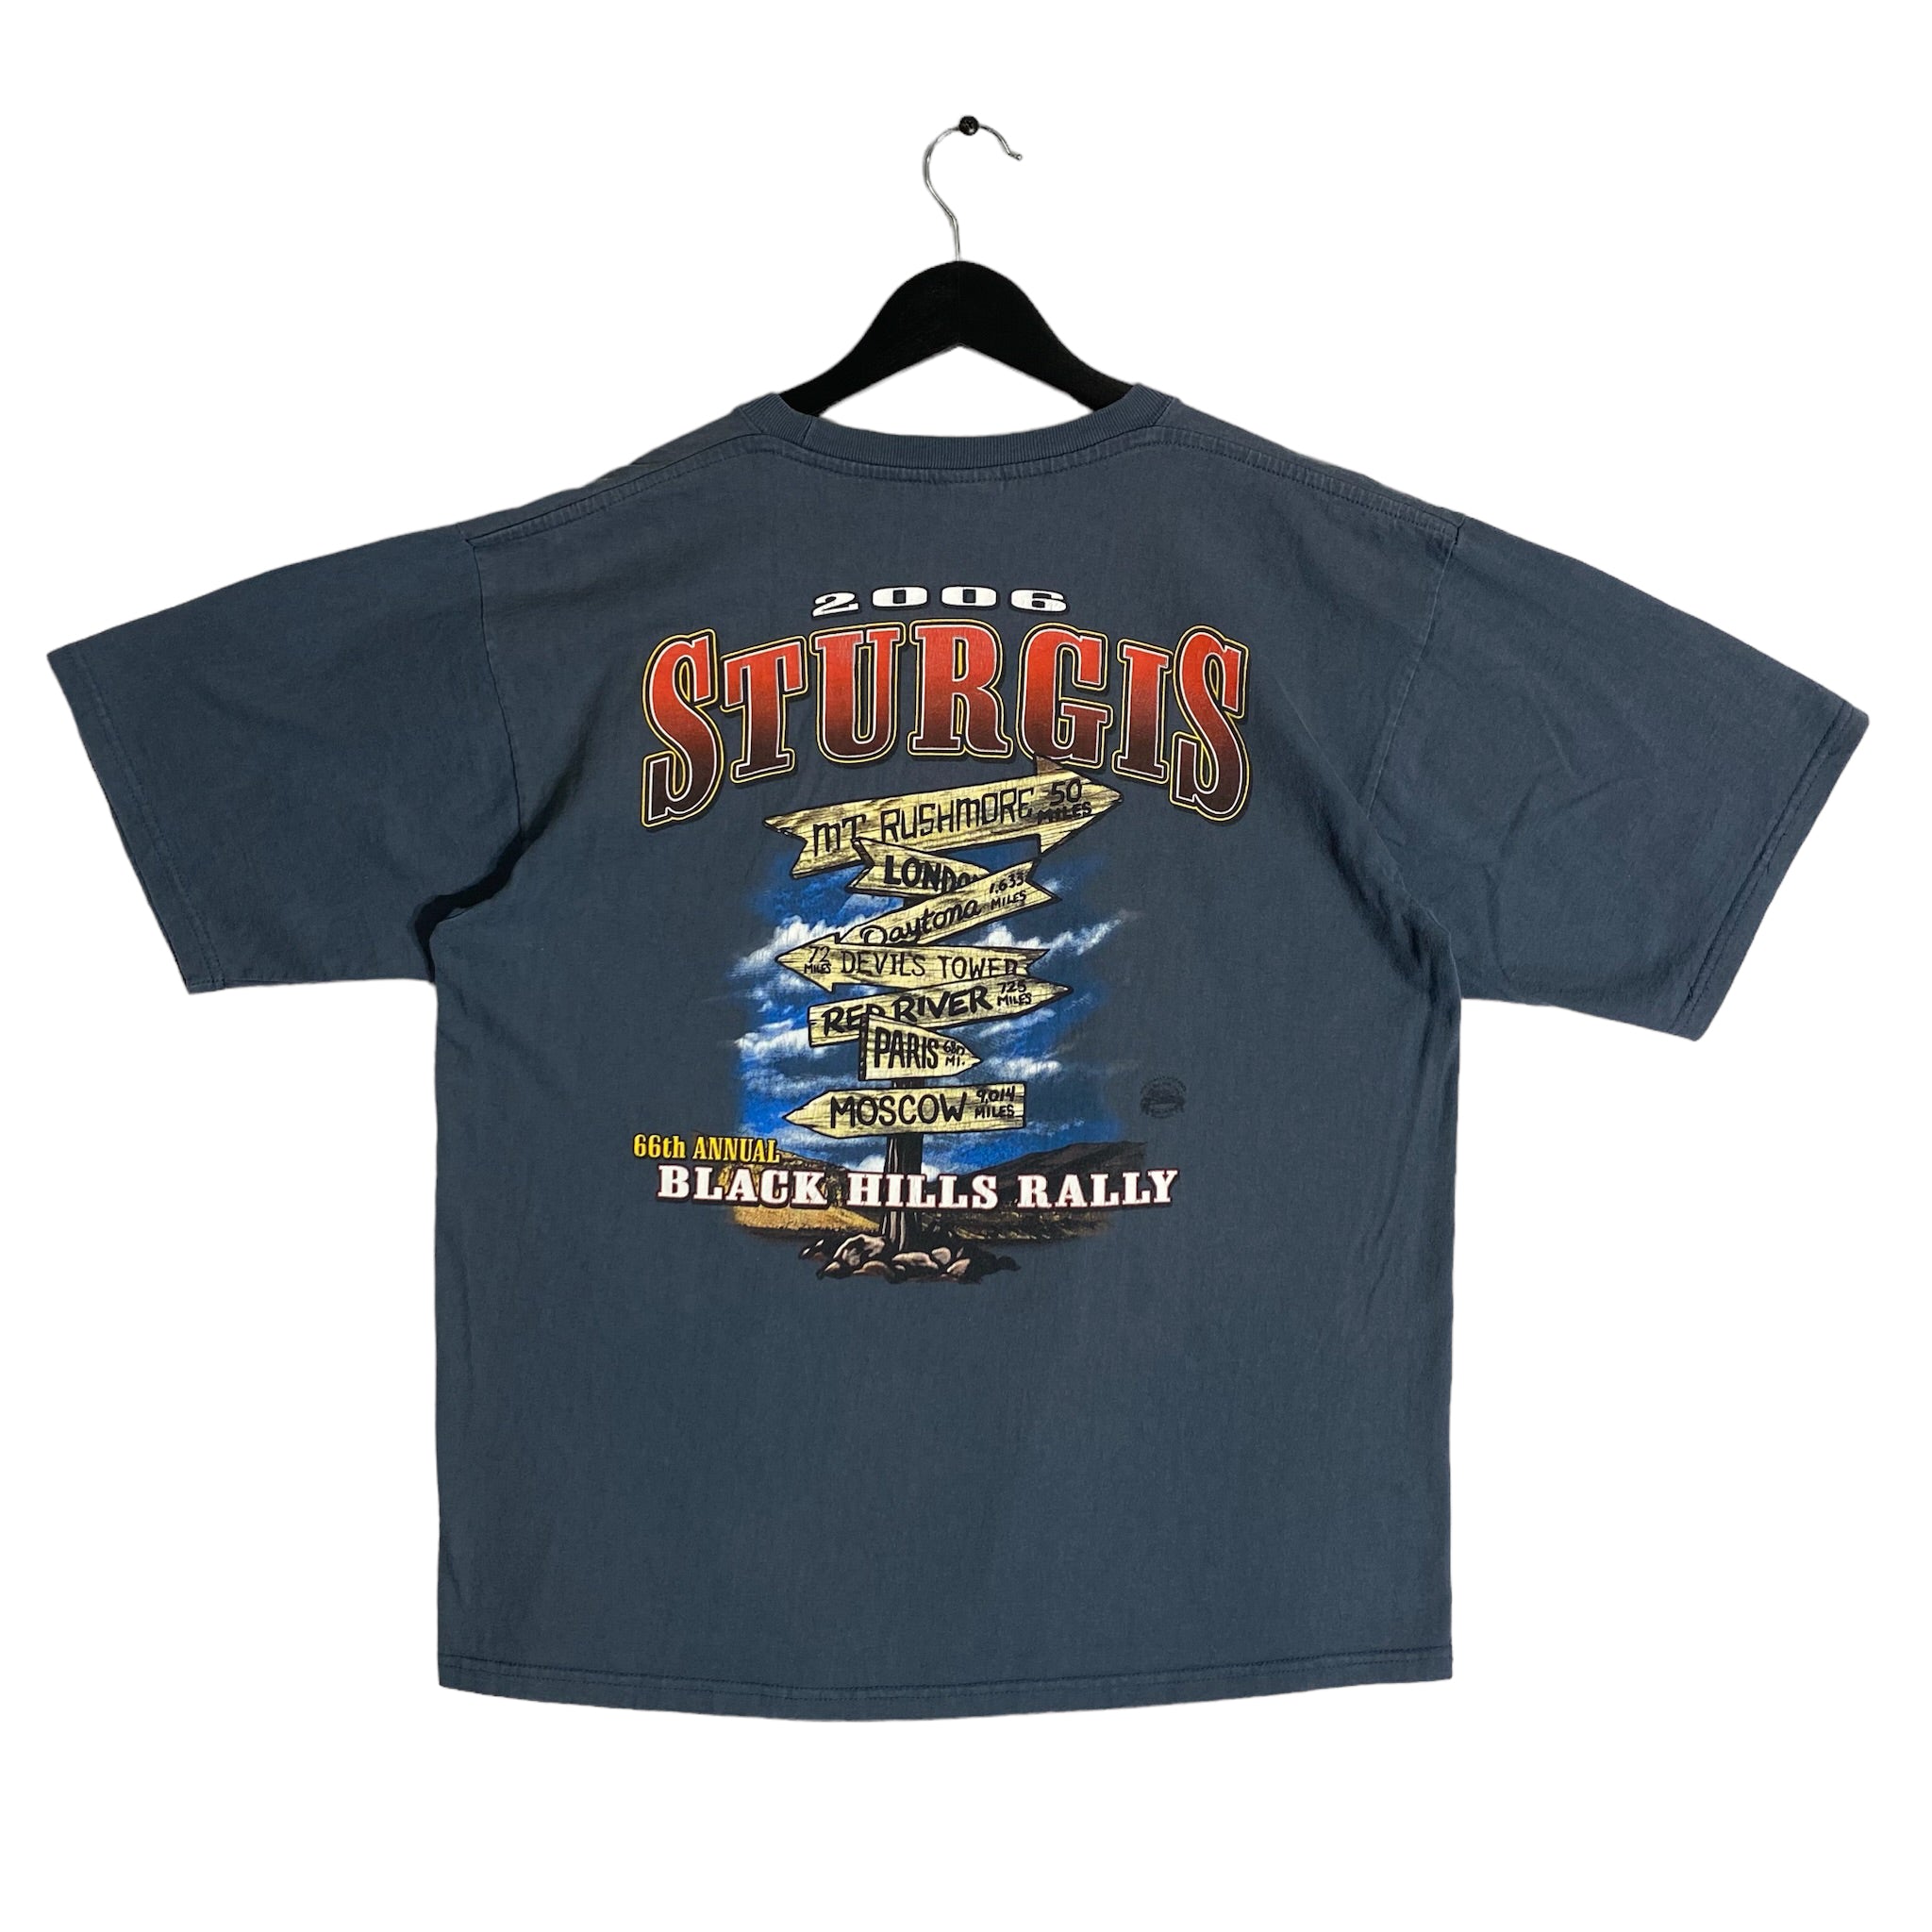 Sturgis Black Hills Rally Shirt 2006